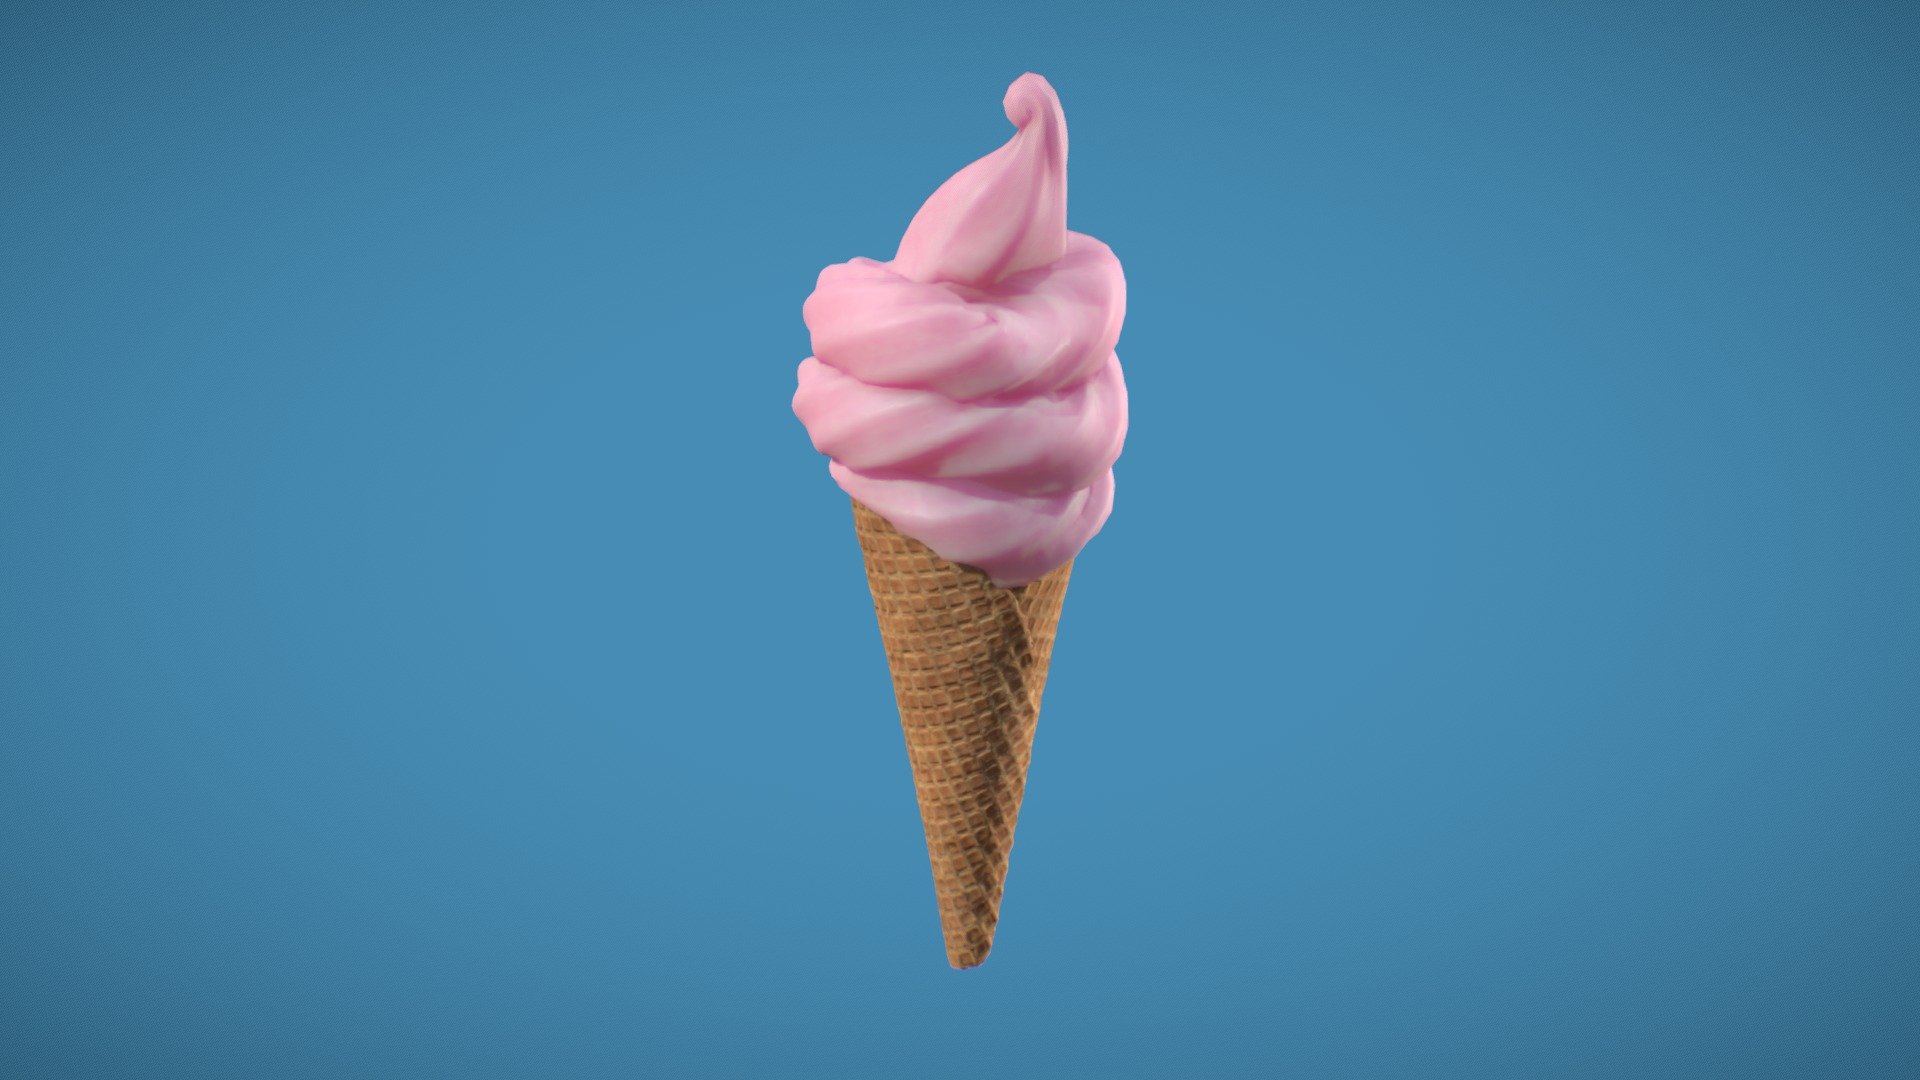 Icecream model create in Gelmi Art Studios, to havaianas advertising, using modo 3D - ICECREAM - Download Free 3D model by gelmi.com.br (@rodrigogelmi) 3d model